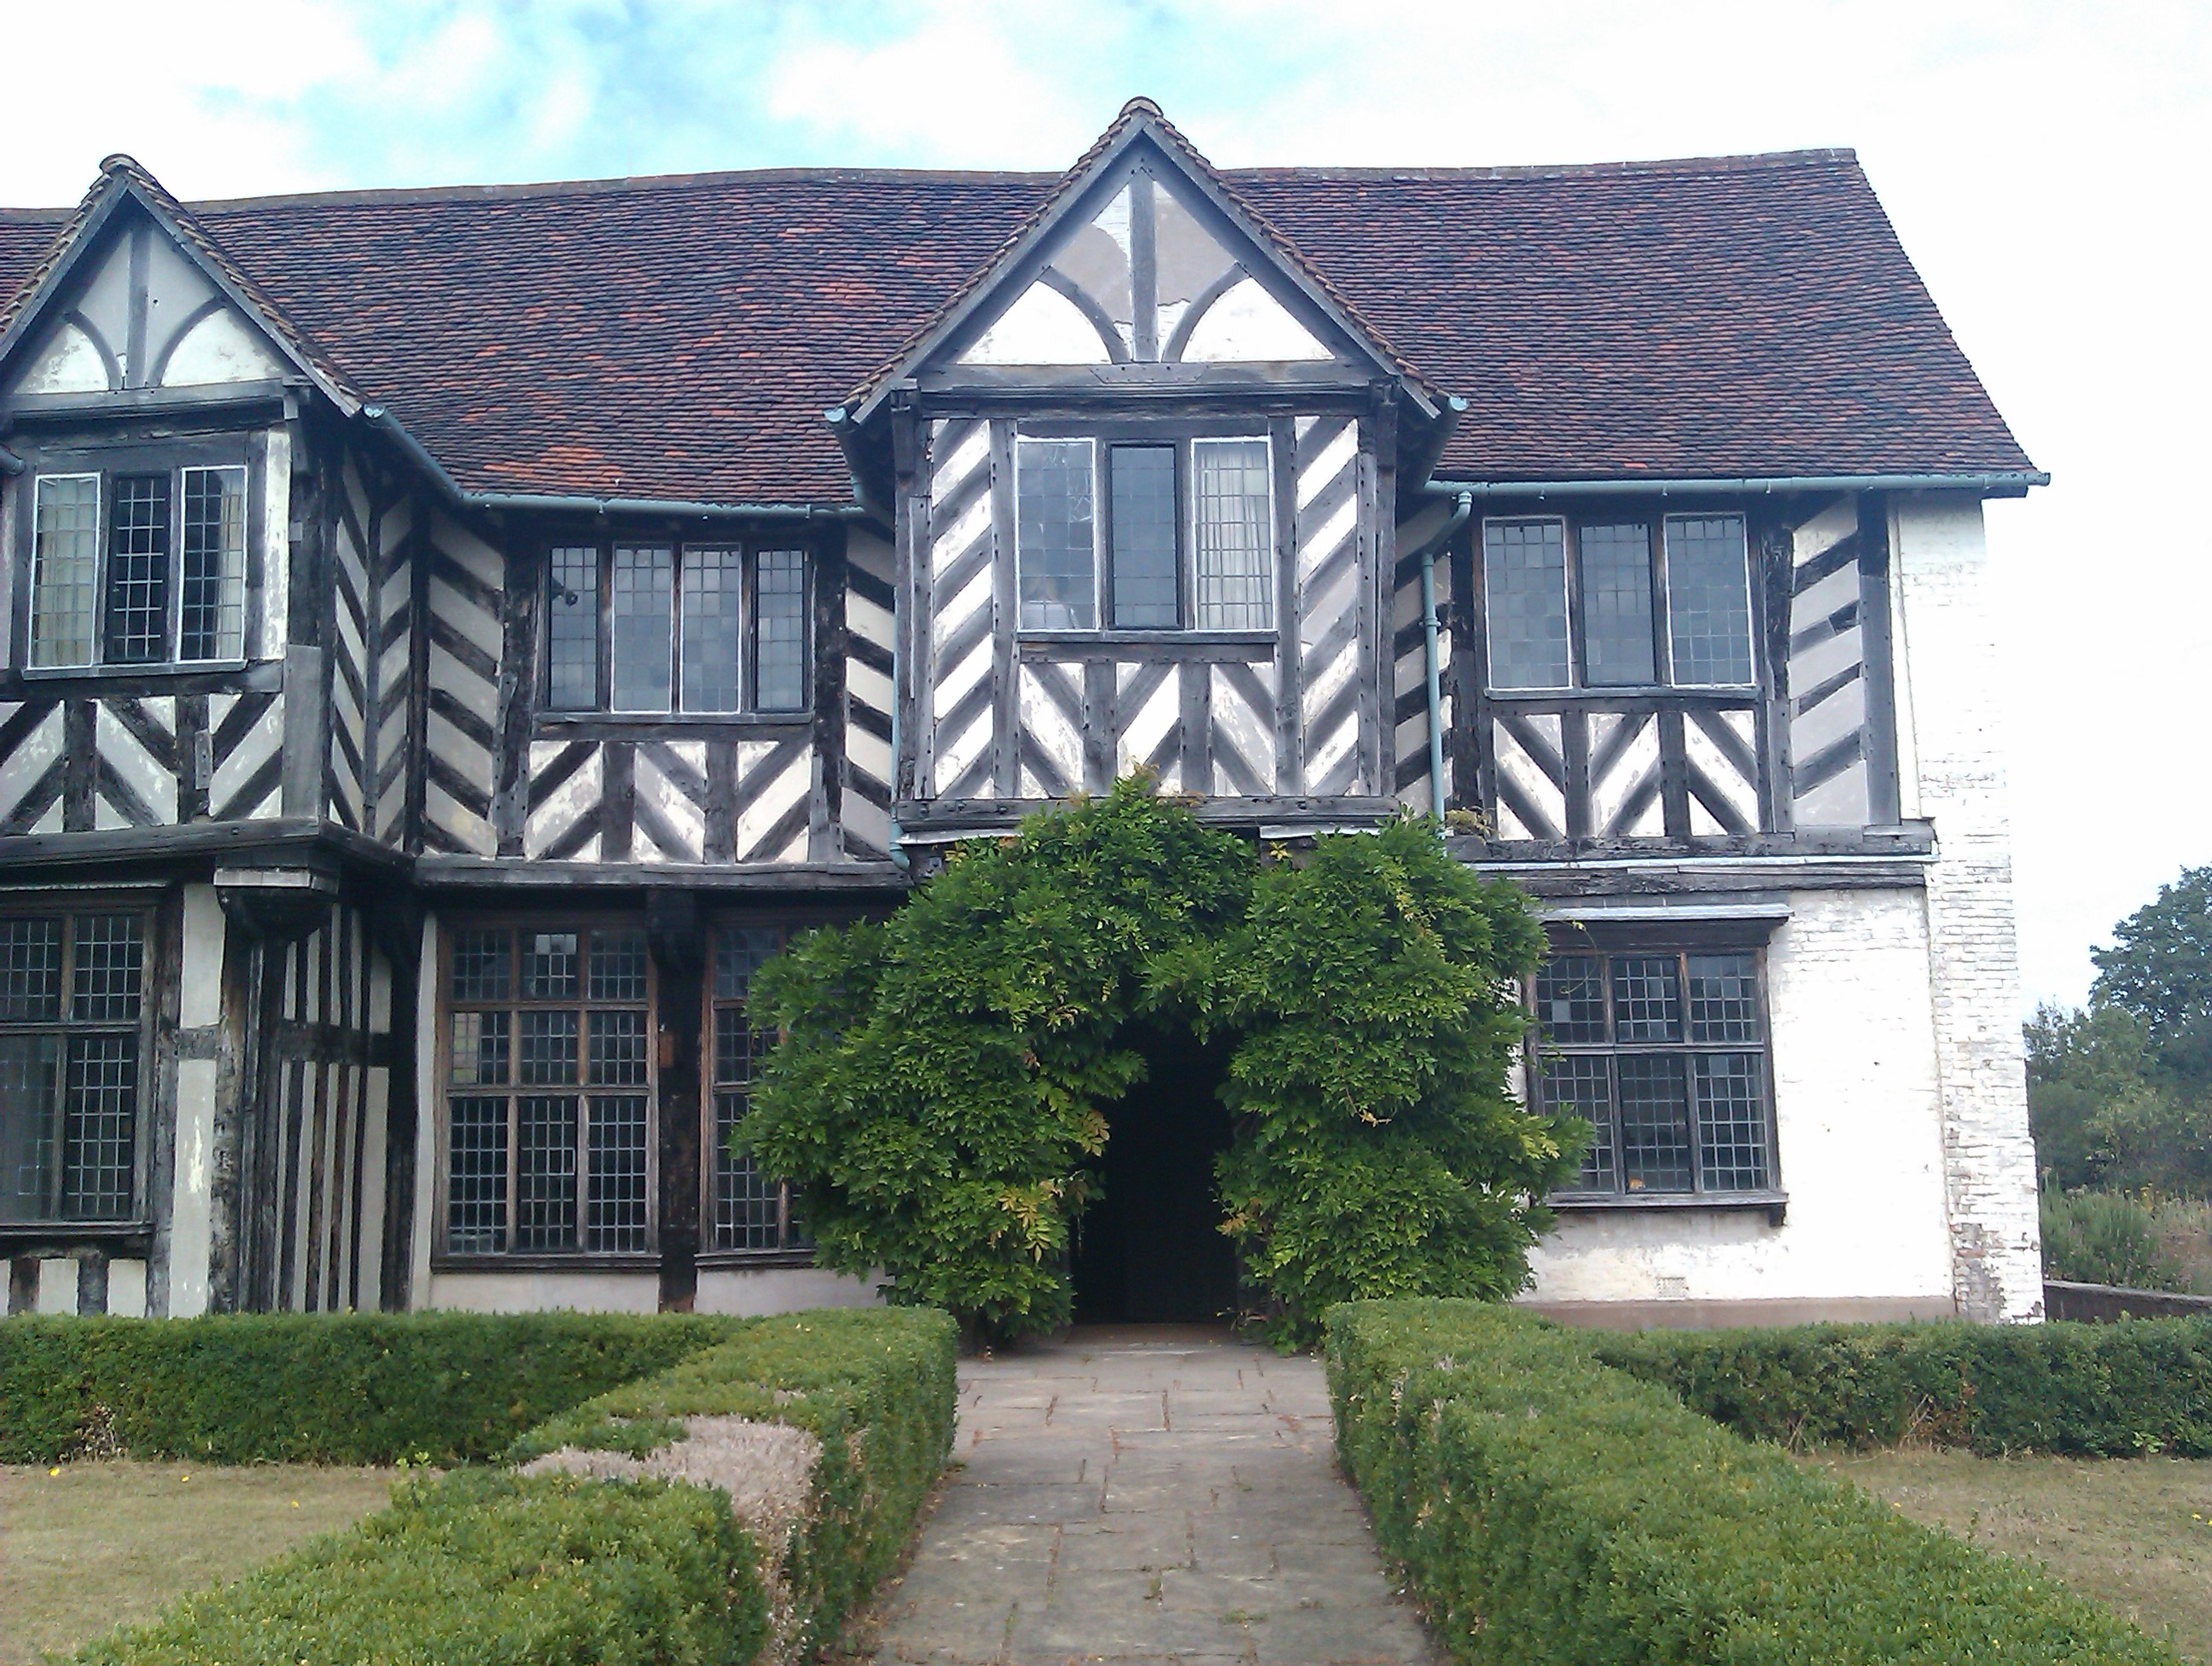 Tudor hall, Architecture, Beams, Birmingham, Farmhouse, HQ Photo